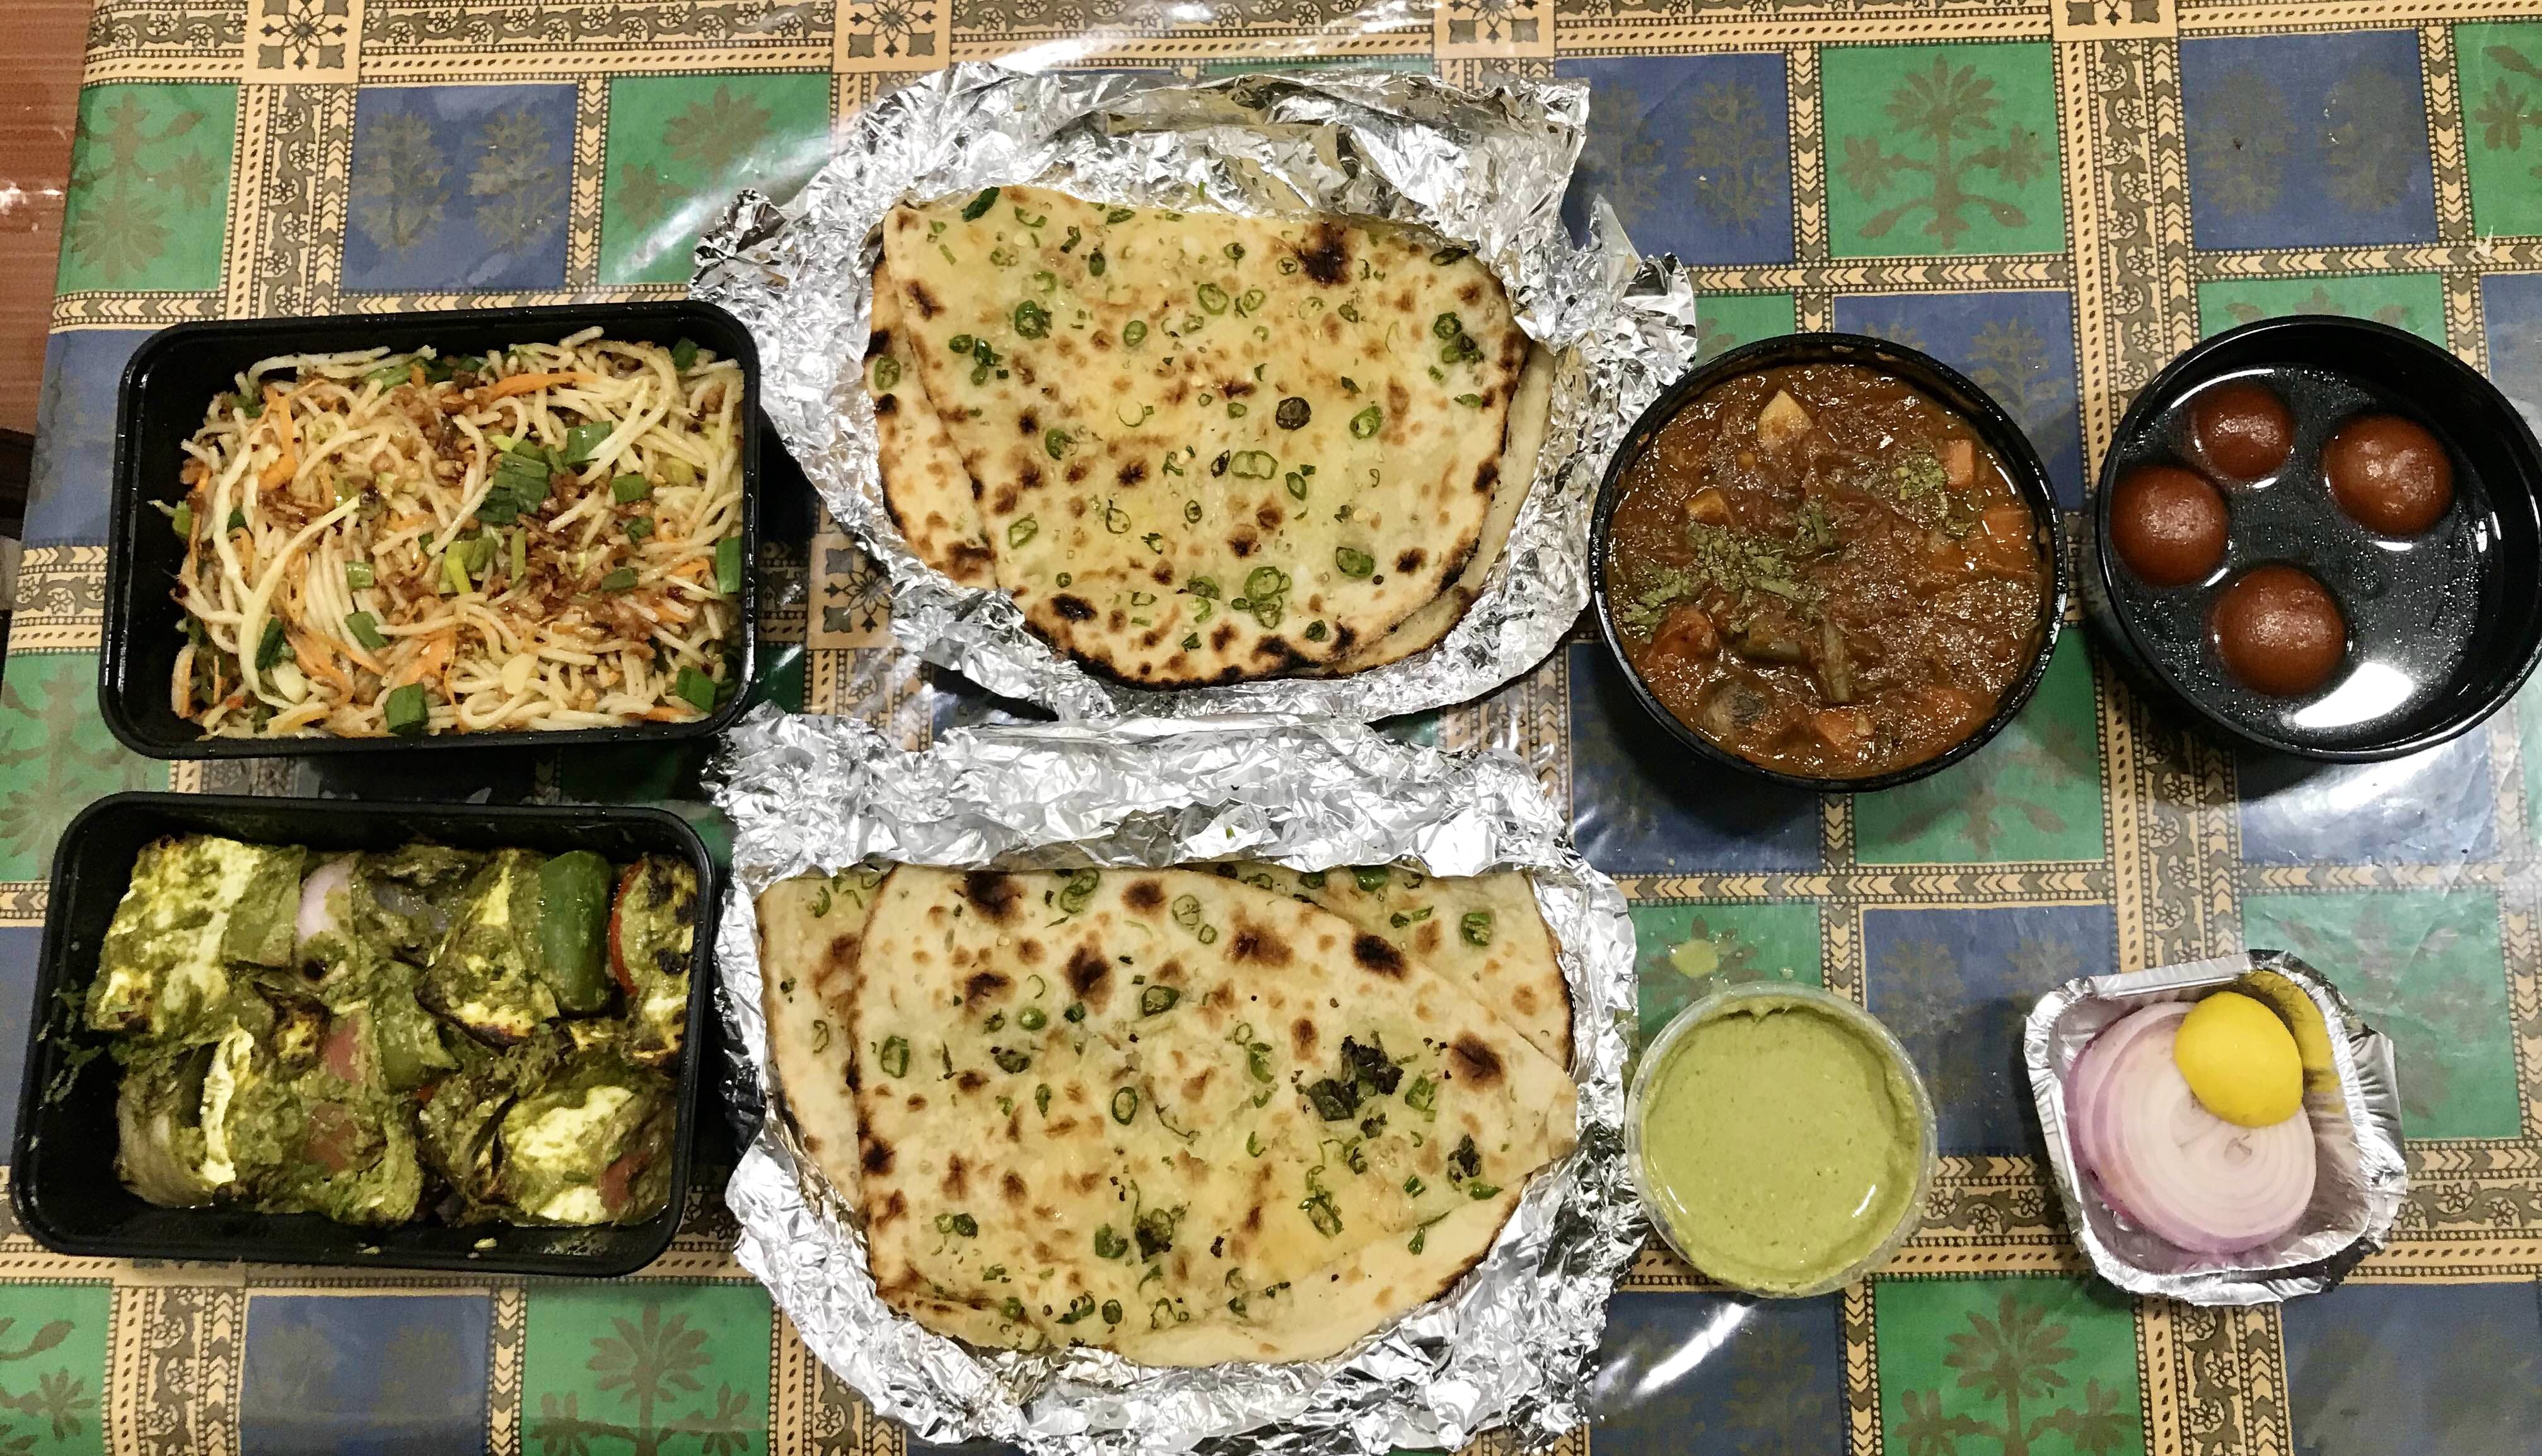 Food,Dish,Cuisine,Ingredient,Roti,Paratha,Flatbread,Comfort food,Chapati,Indian cuisine